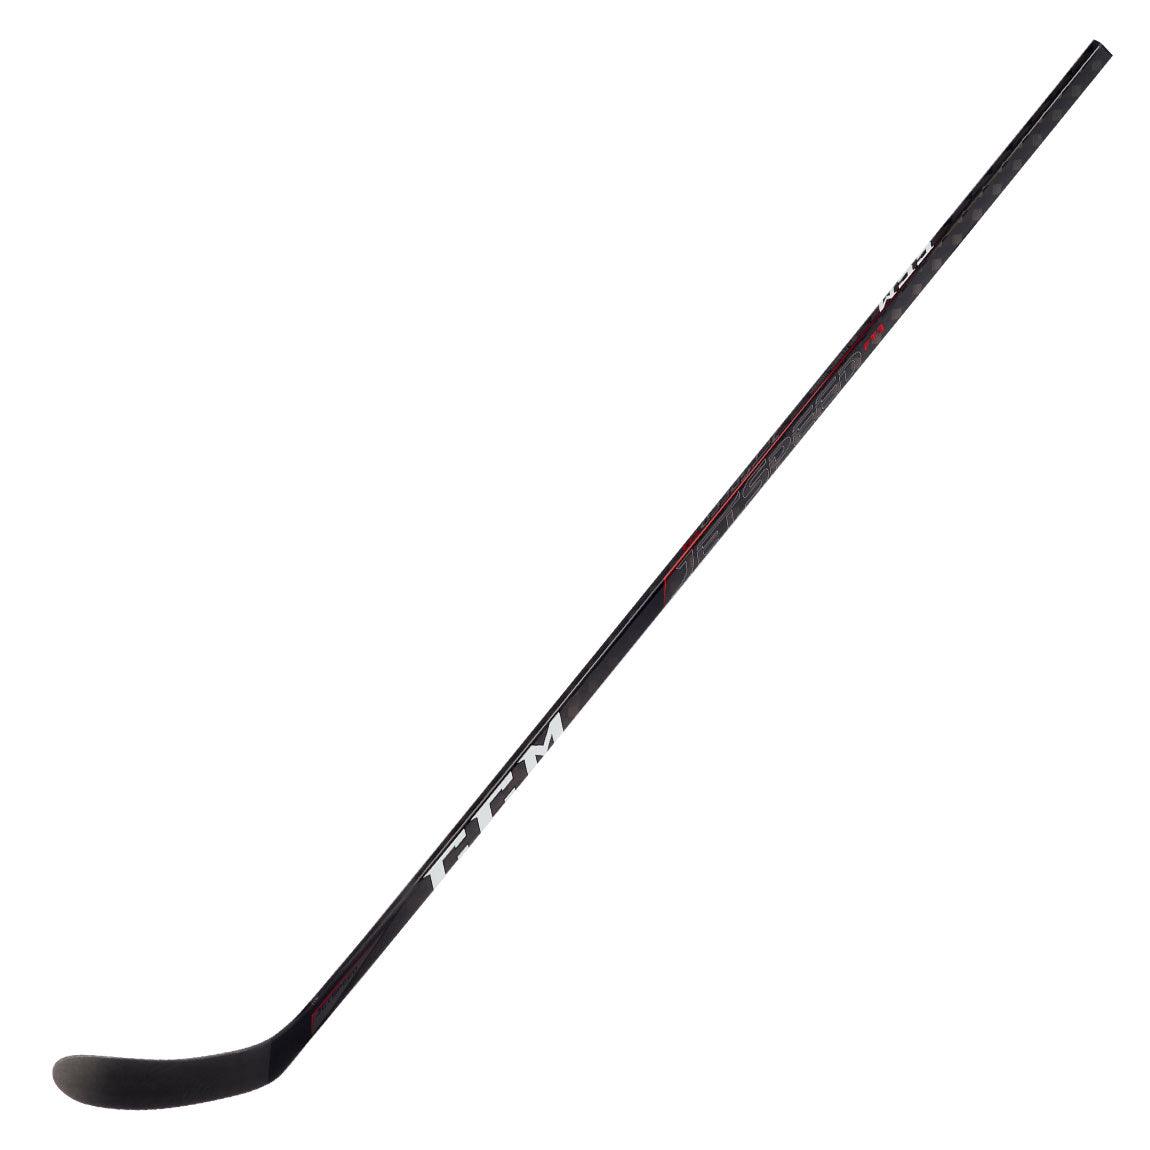 Jetspeed FT3 Hockey Stick - Senior - Sports Excellence